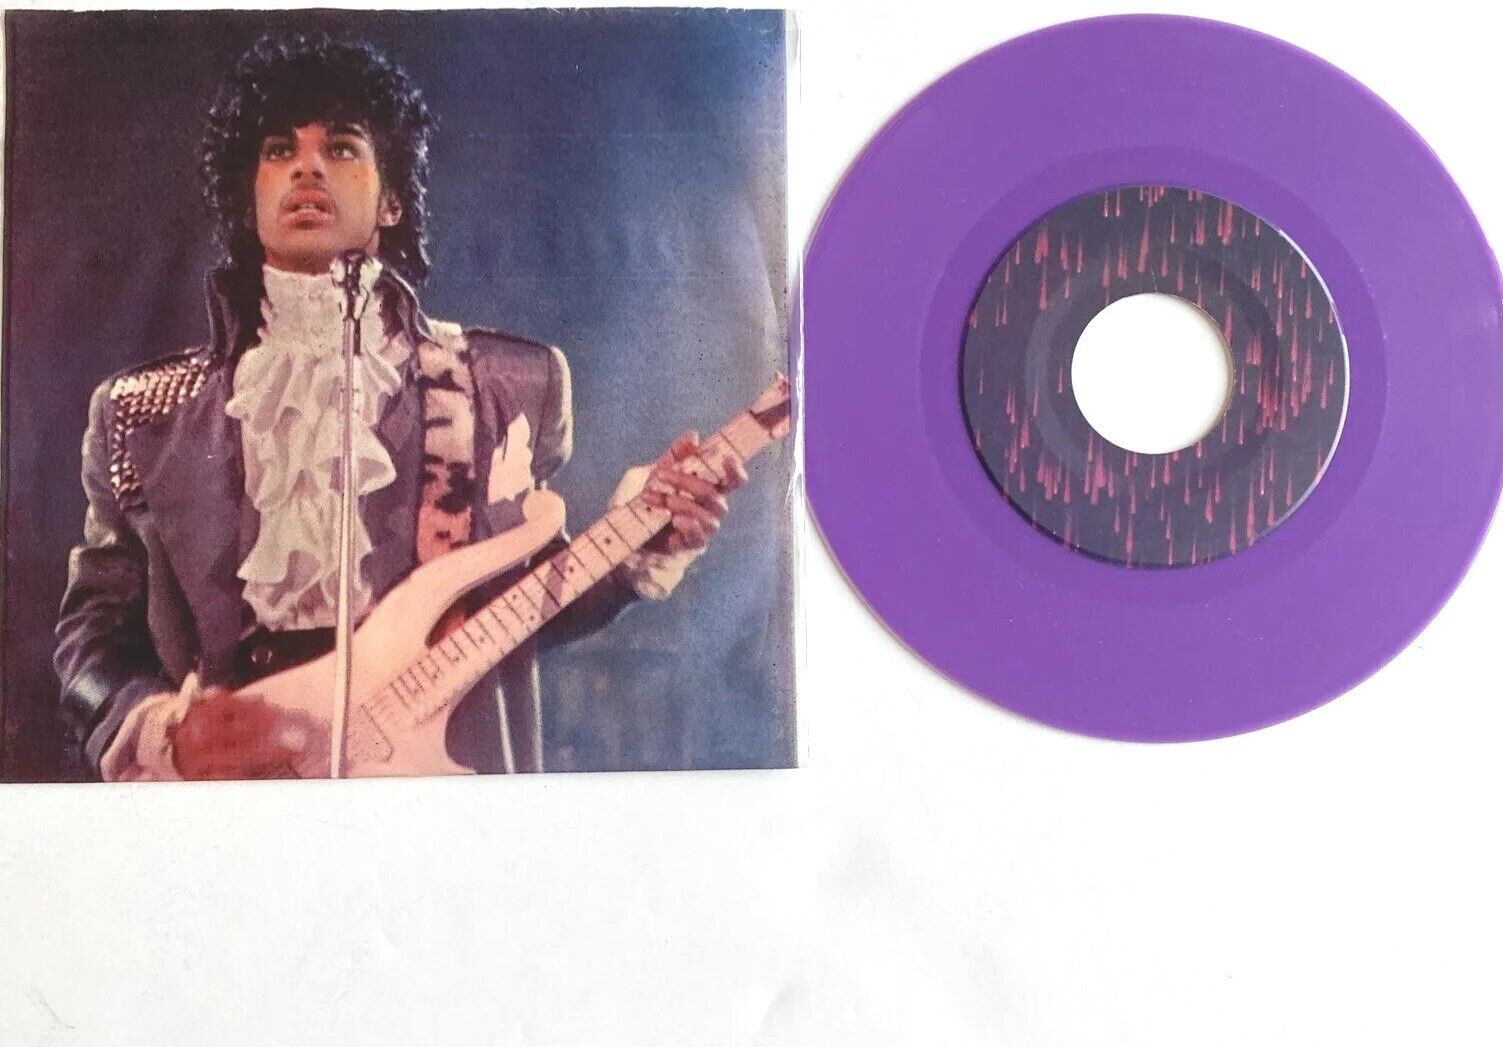 Prince, Purple Rain, 1984, 7” 45 RPM, PURPLE VINYL, PS - NEAR MINT